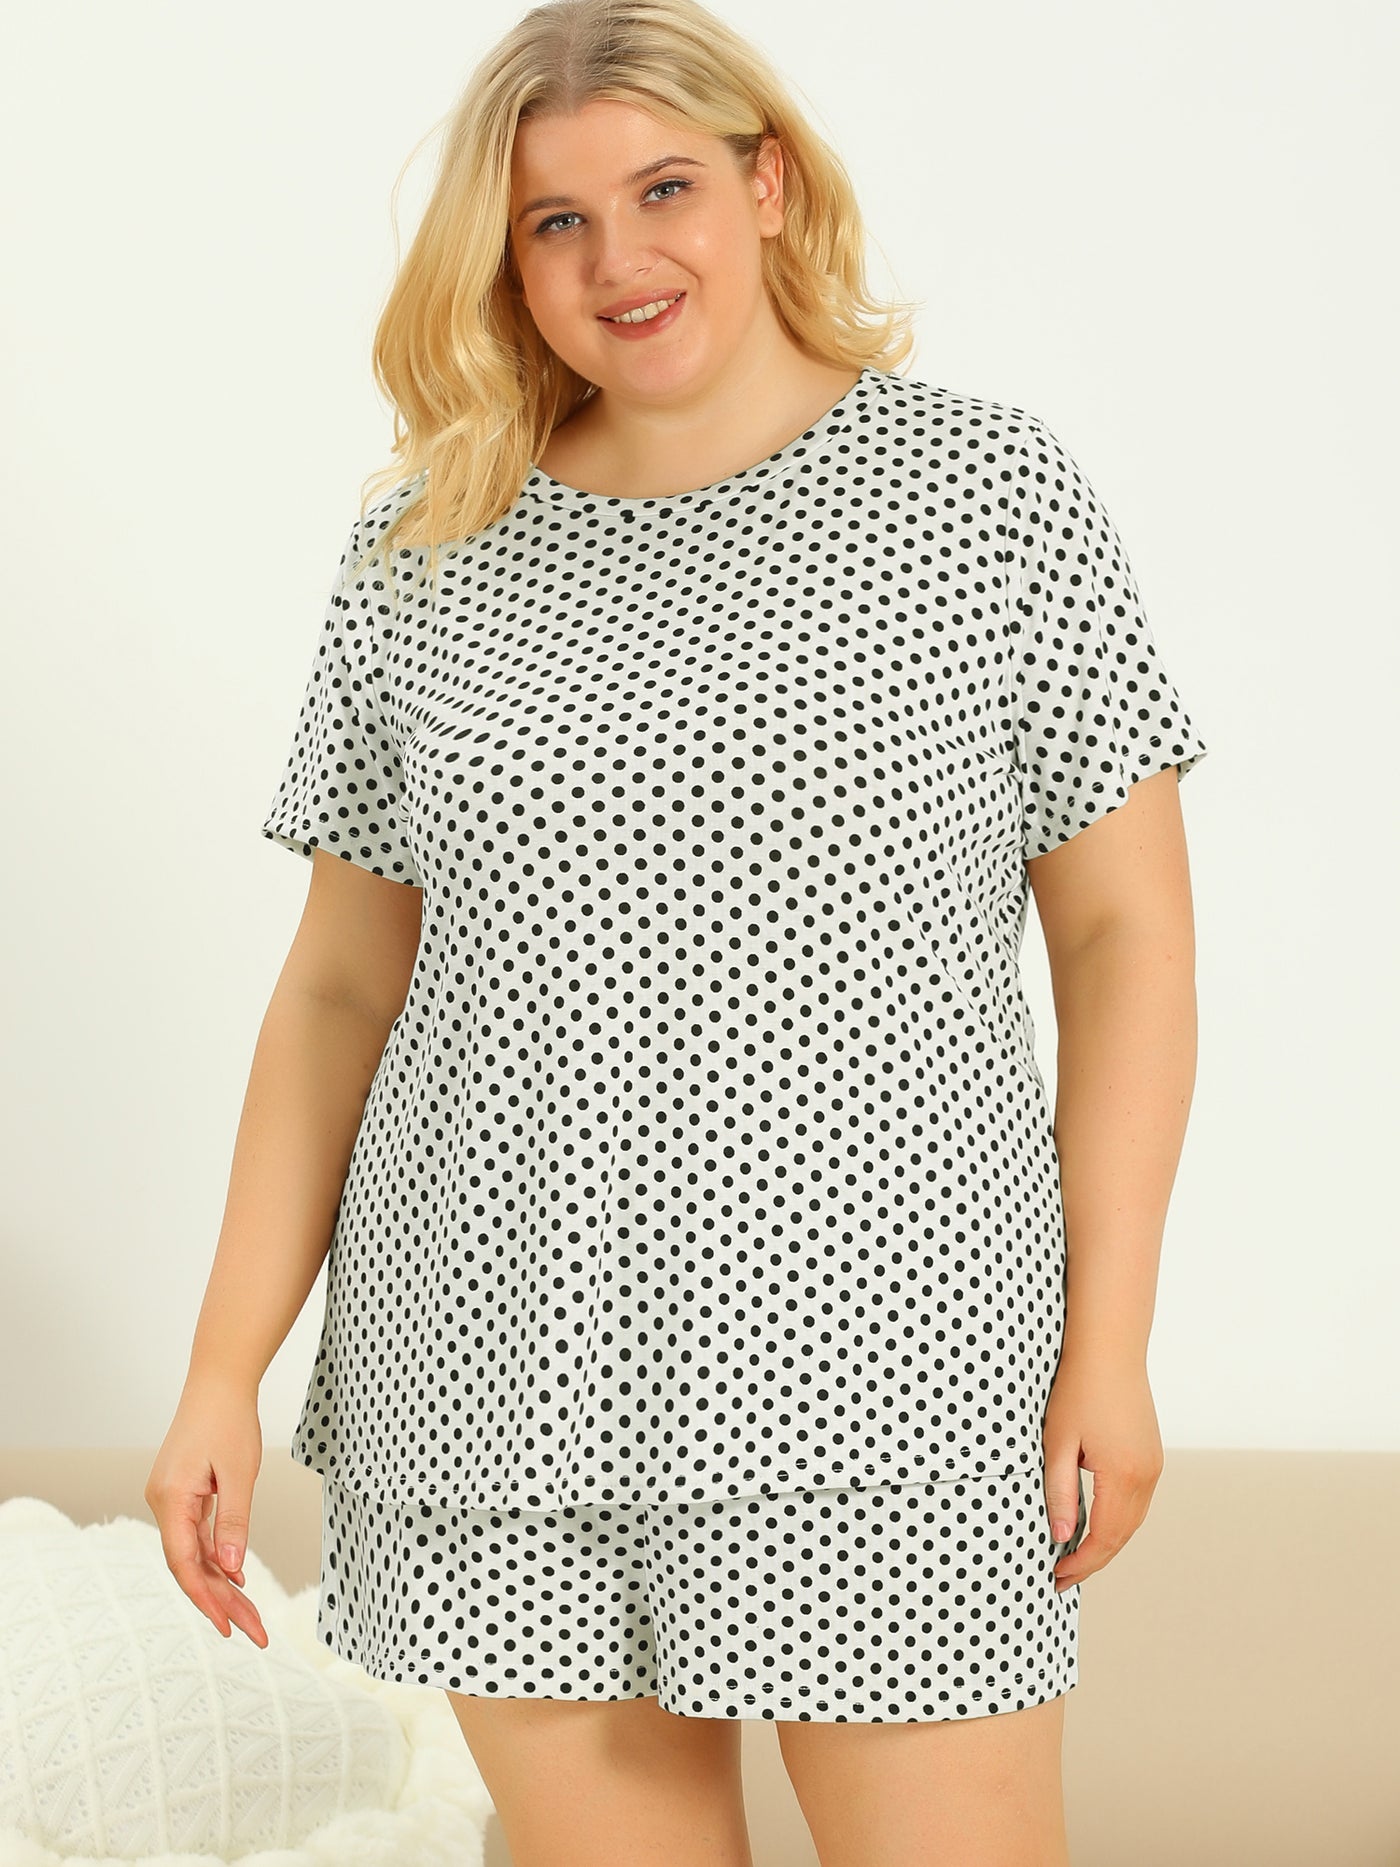 Bublédon Comfy Plus Size Short Sleeve Polka Dot Pajamas Set